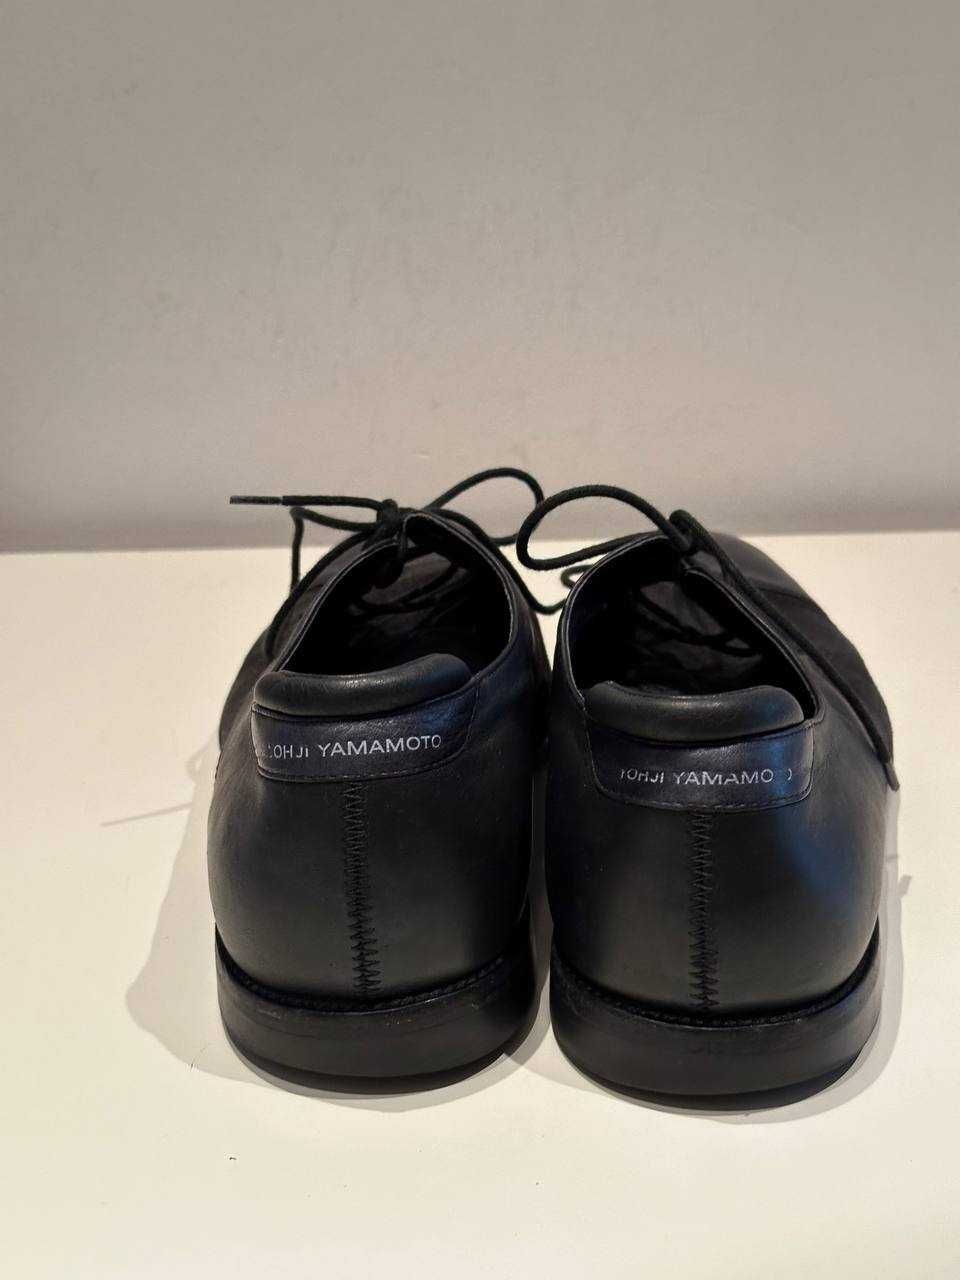 Adidas Y-3 buty męskie, rozmiar 45, skóra